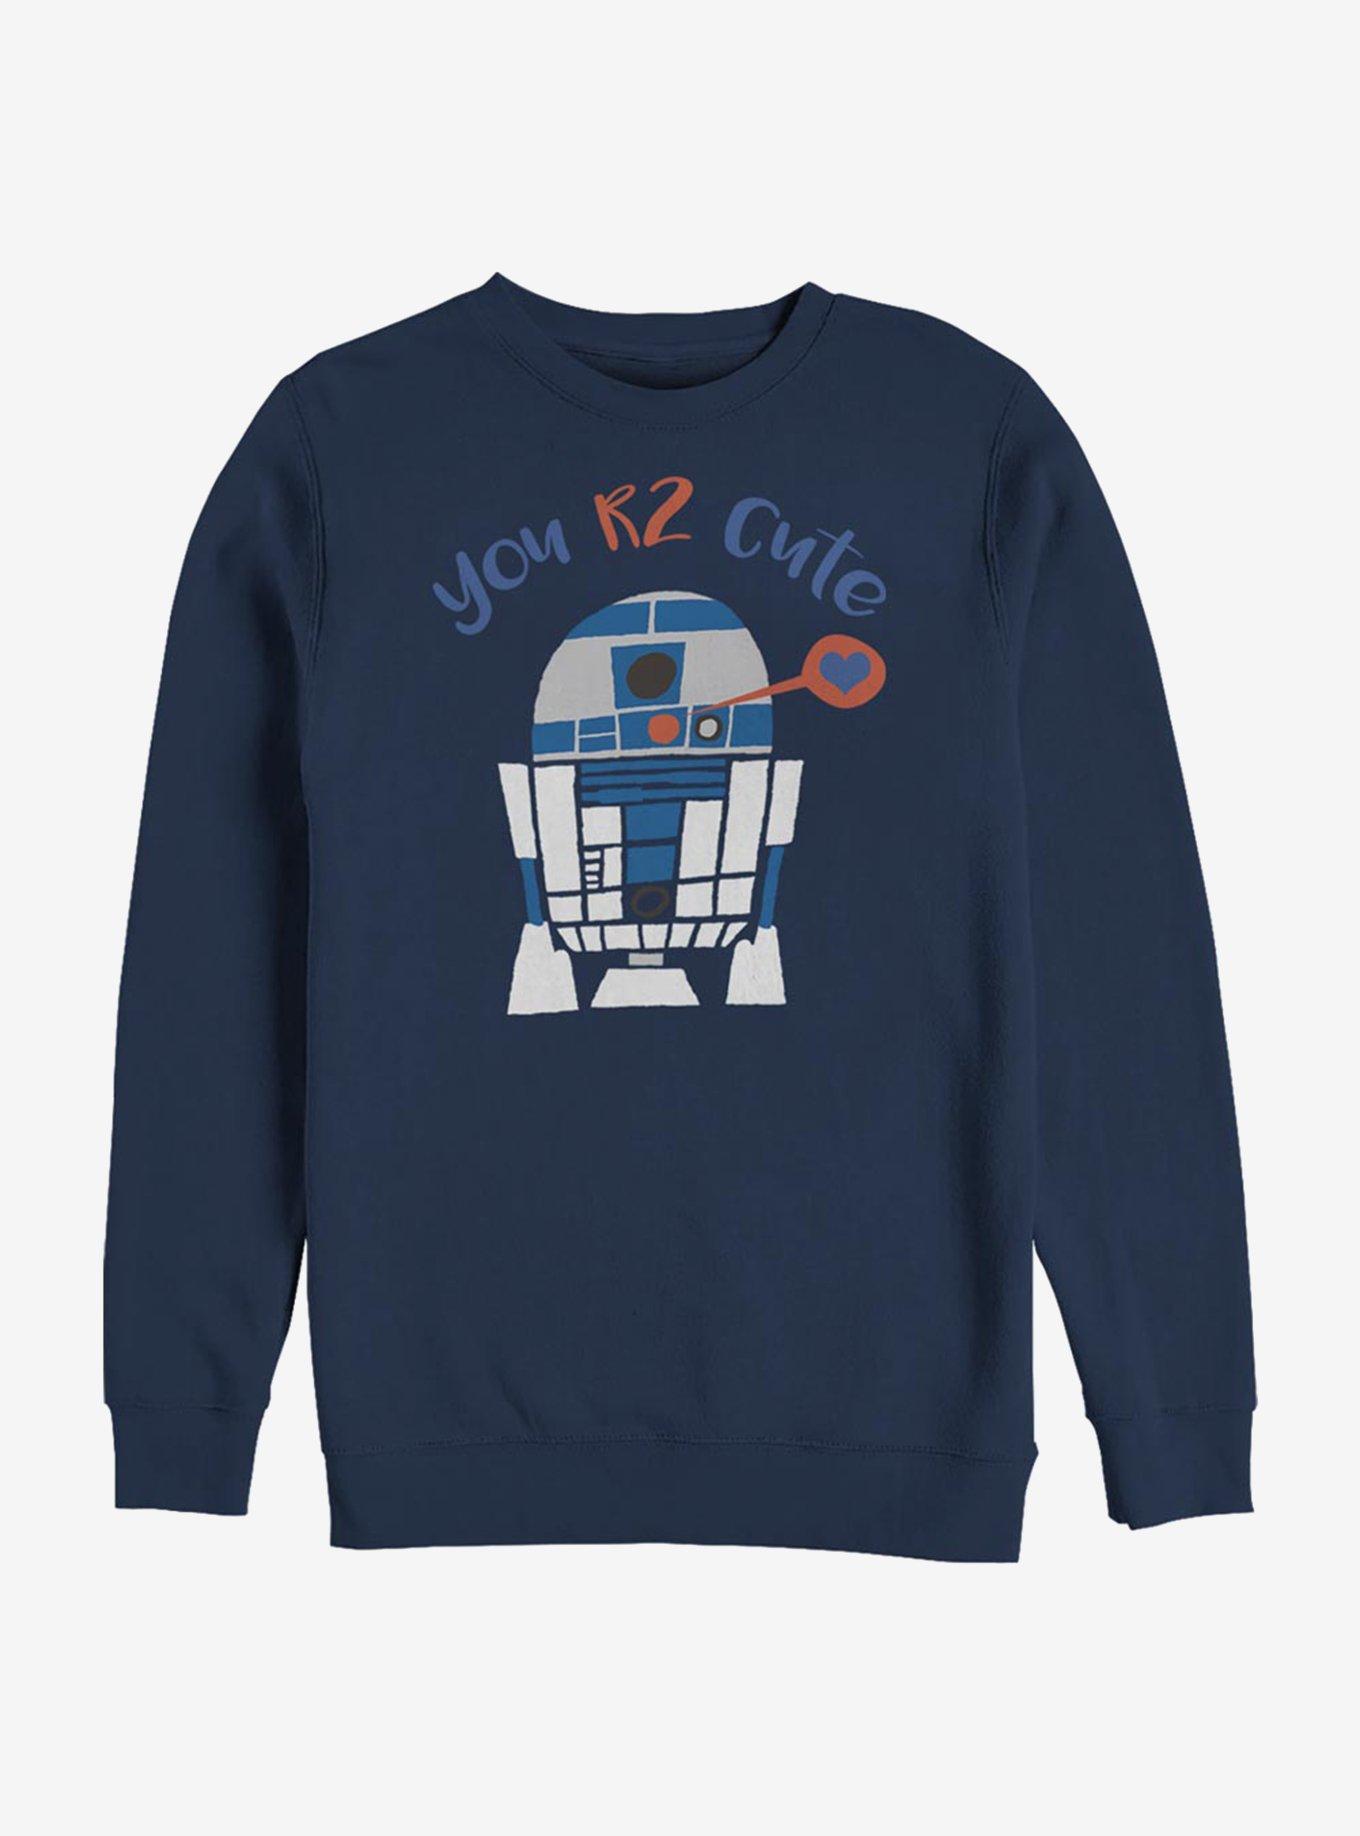 Star Wars You R2 Cute Crew Sweatshirt, NAVY, hi-res